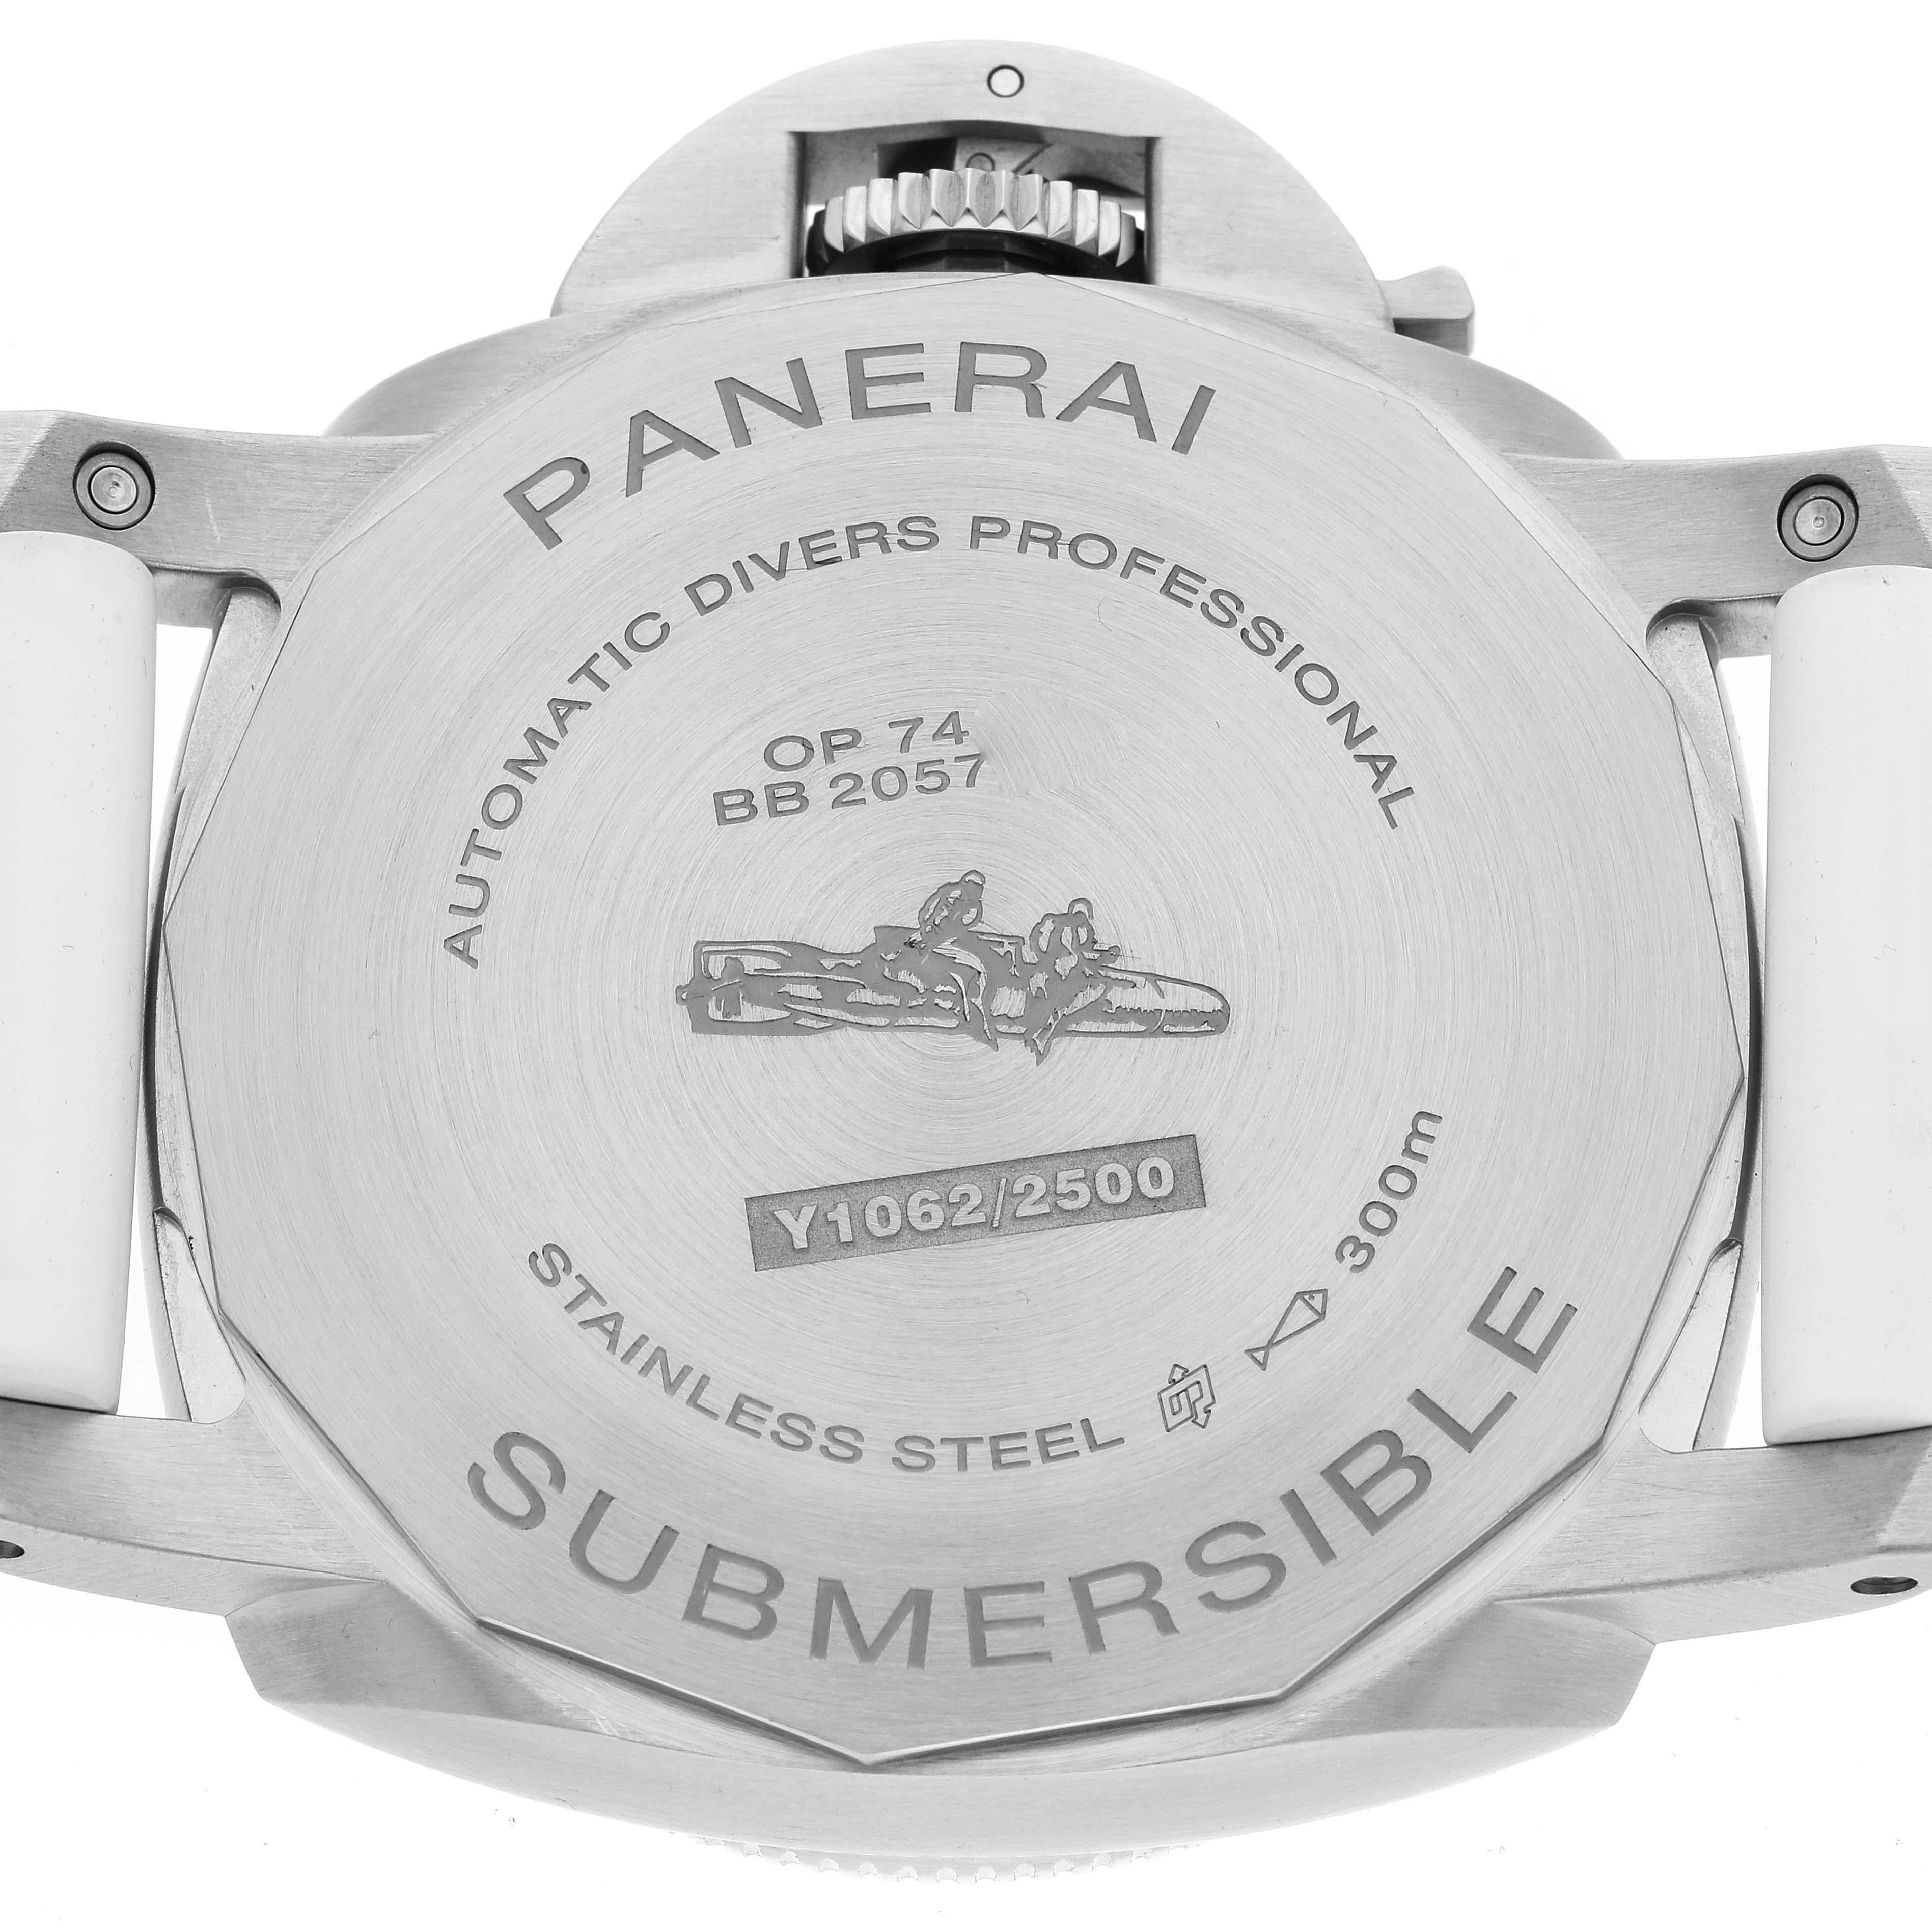 Panerai Submersible QuarantaQuattro Bianco Steel Mens Watch PAM01226 Box Card For Sale 2